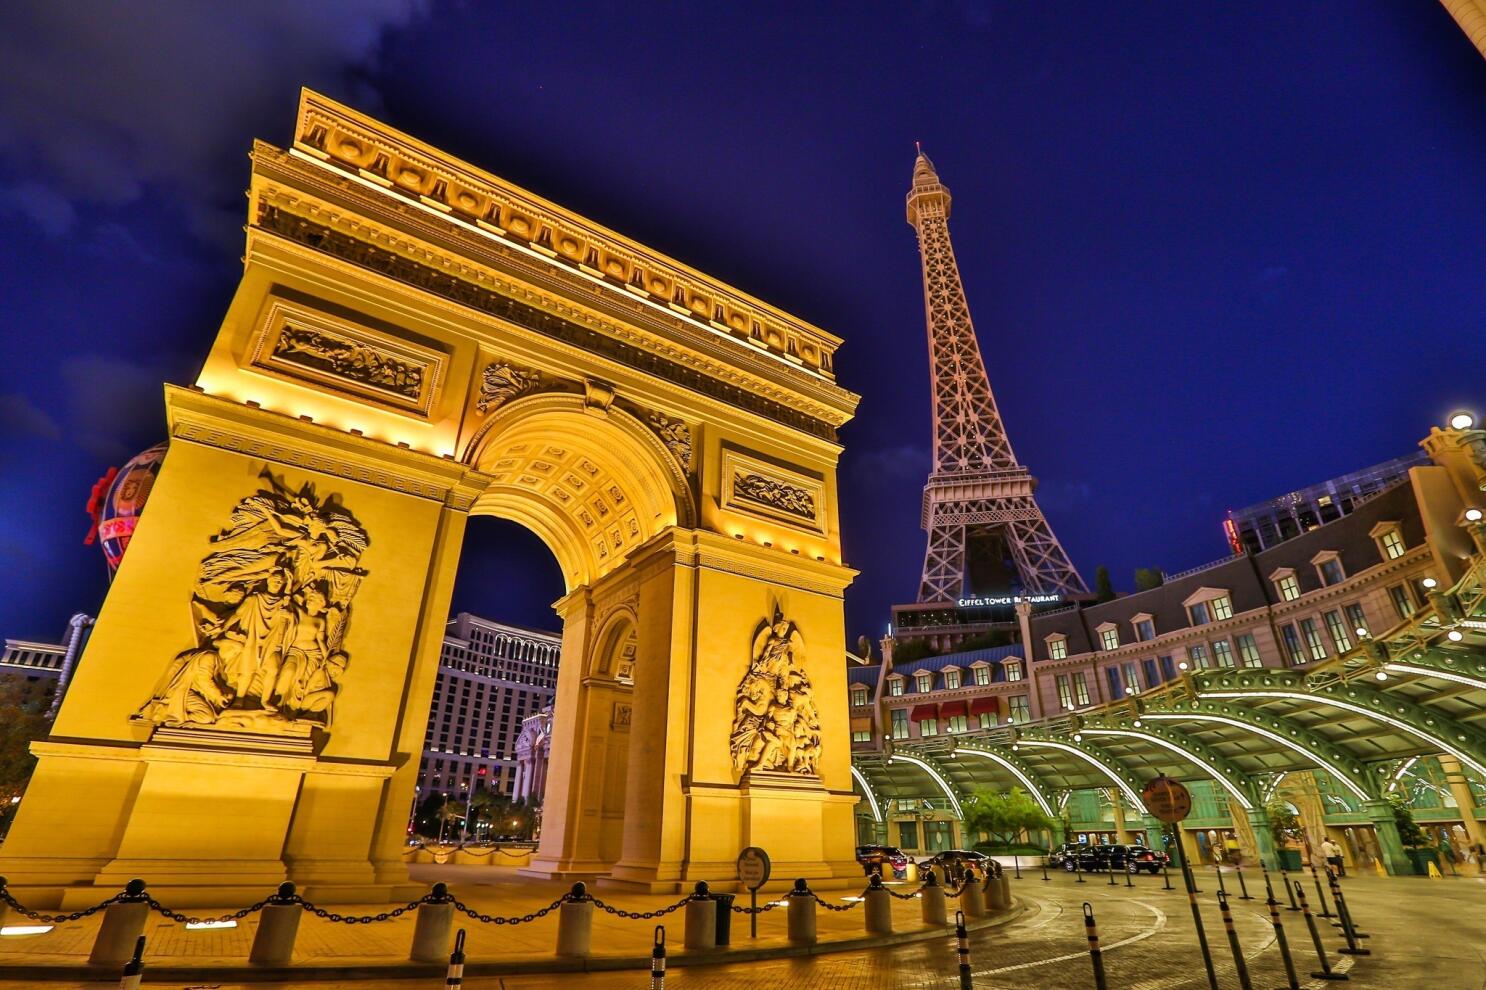 THE CREATION OF A LAS VEGAS LANDMARK - Eiffel Tower Restaurant